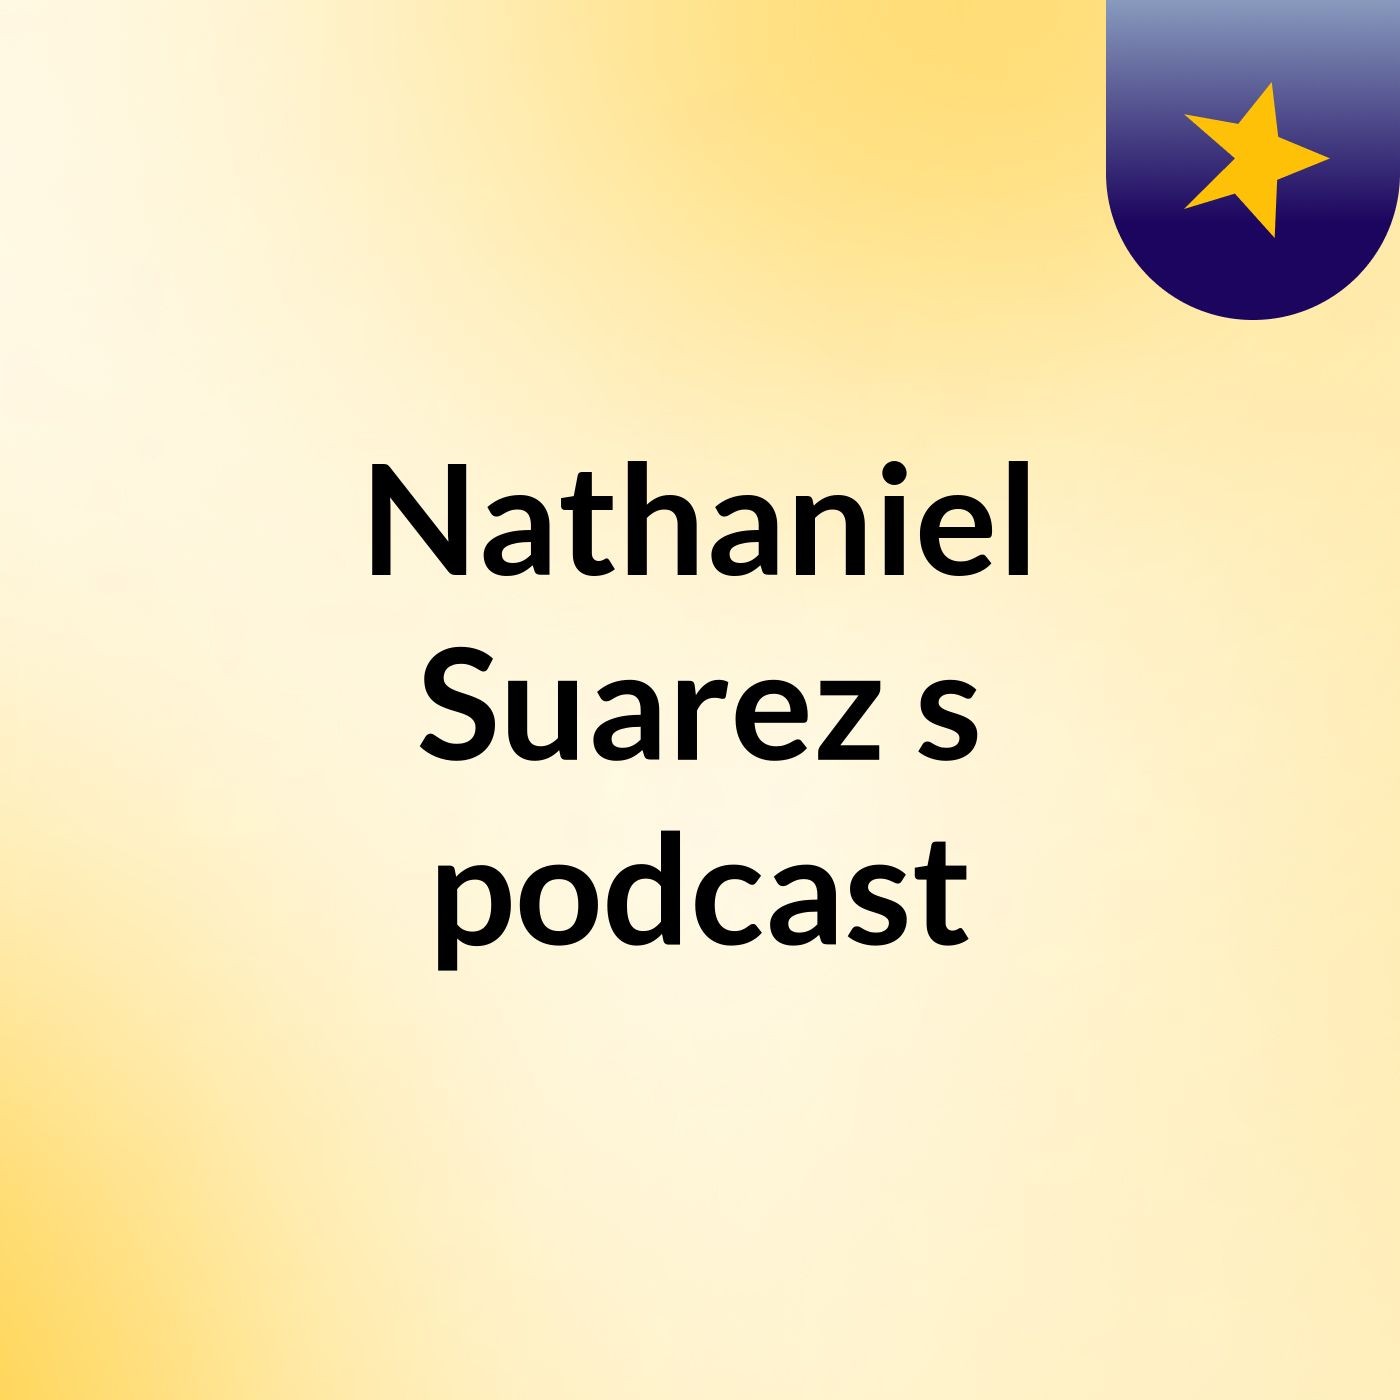 Episode 1 - Nathaniel Suarez's podcast